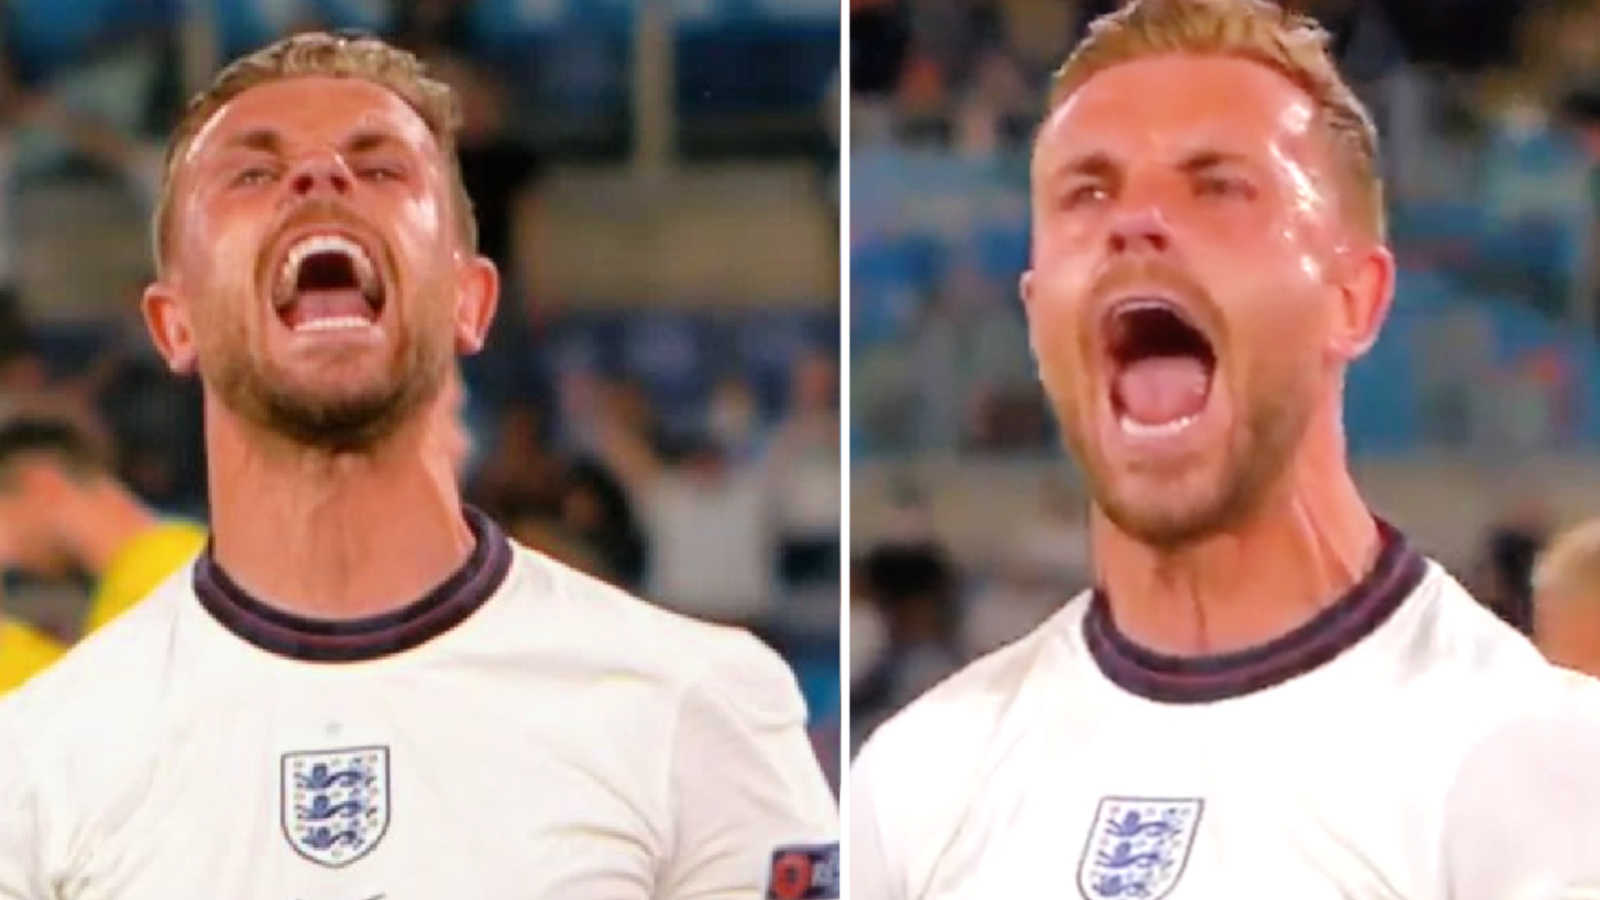 Jordan Henderson lets out a passionate scream after scoring a goal against Ukraine